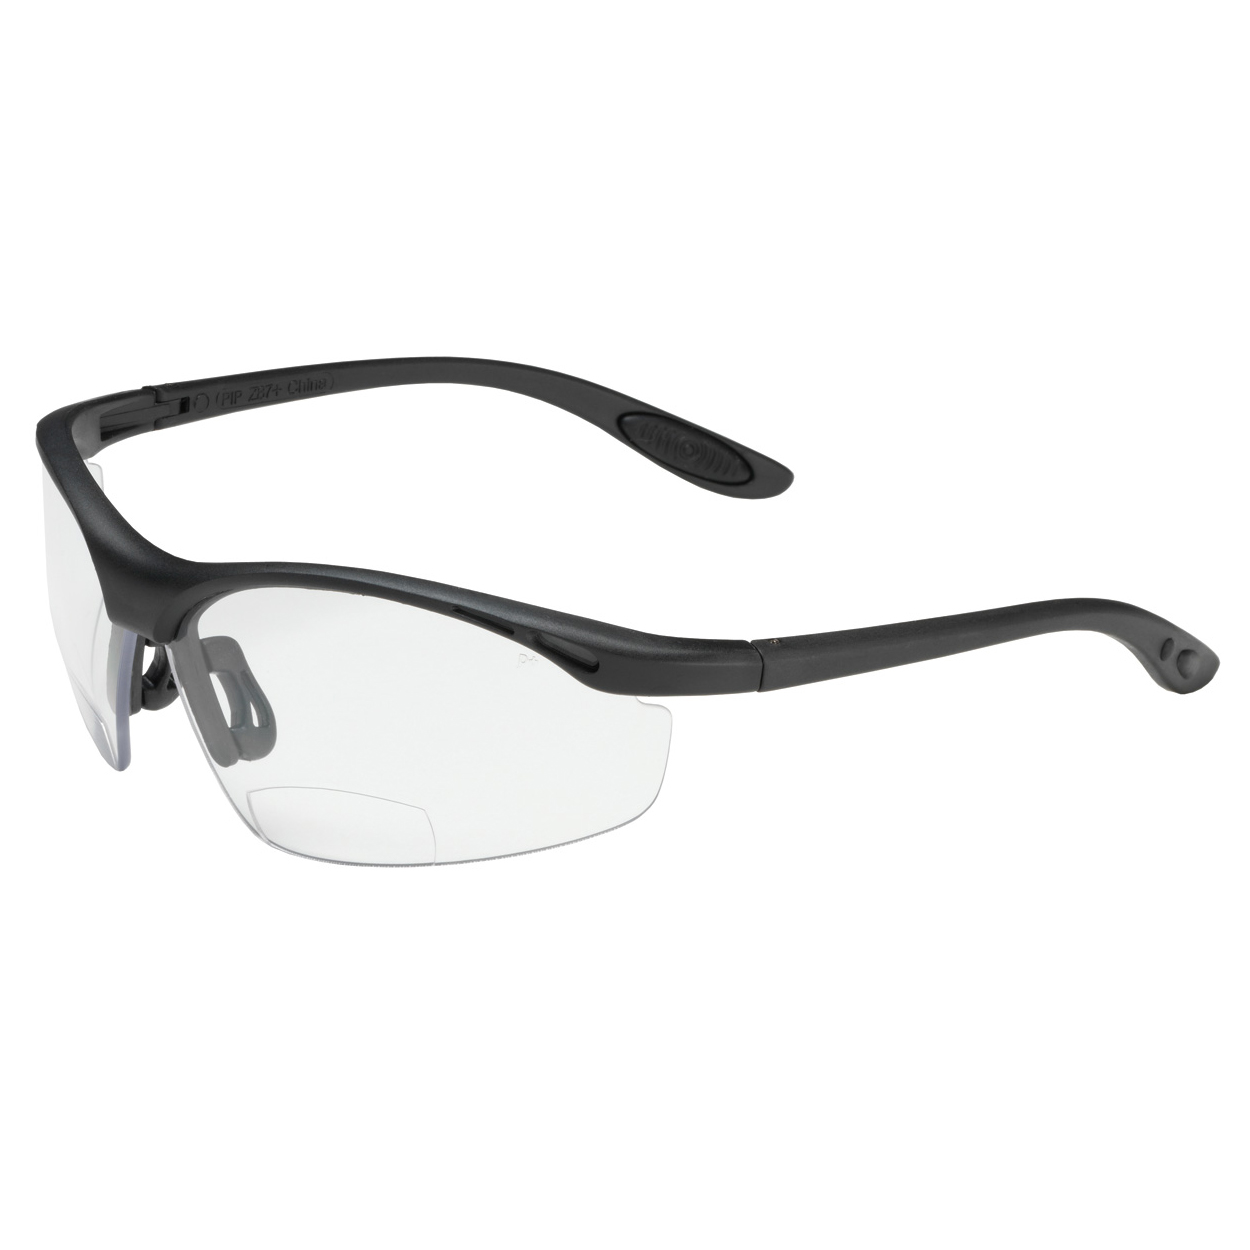 Bouton 250-25-00 MAG Readers Safety Glasses - Black Frame - Clear ...